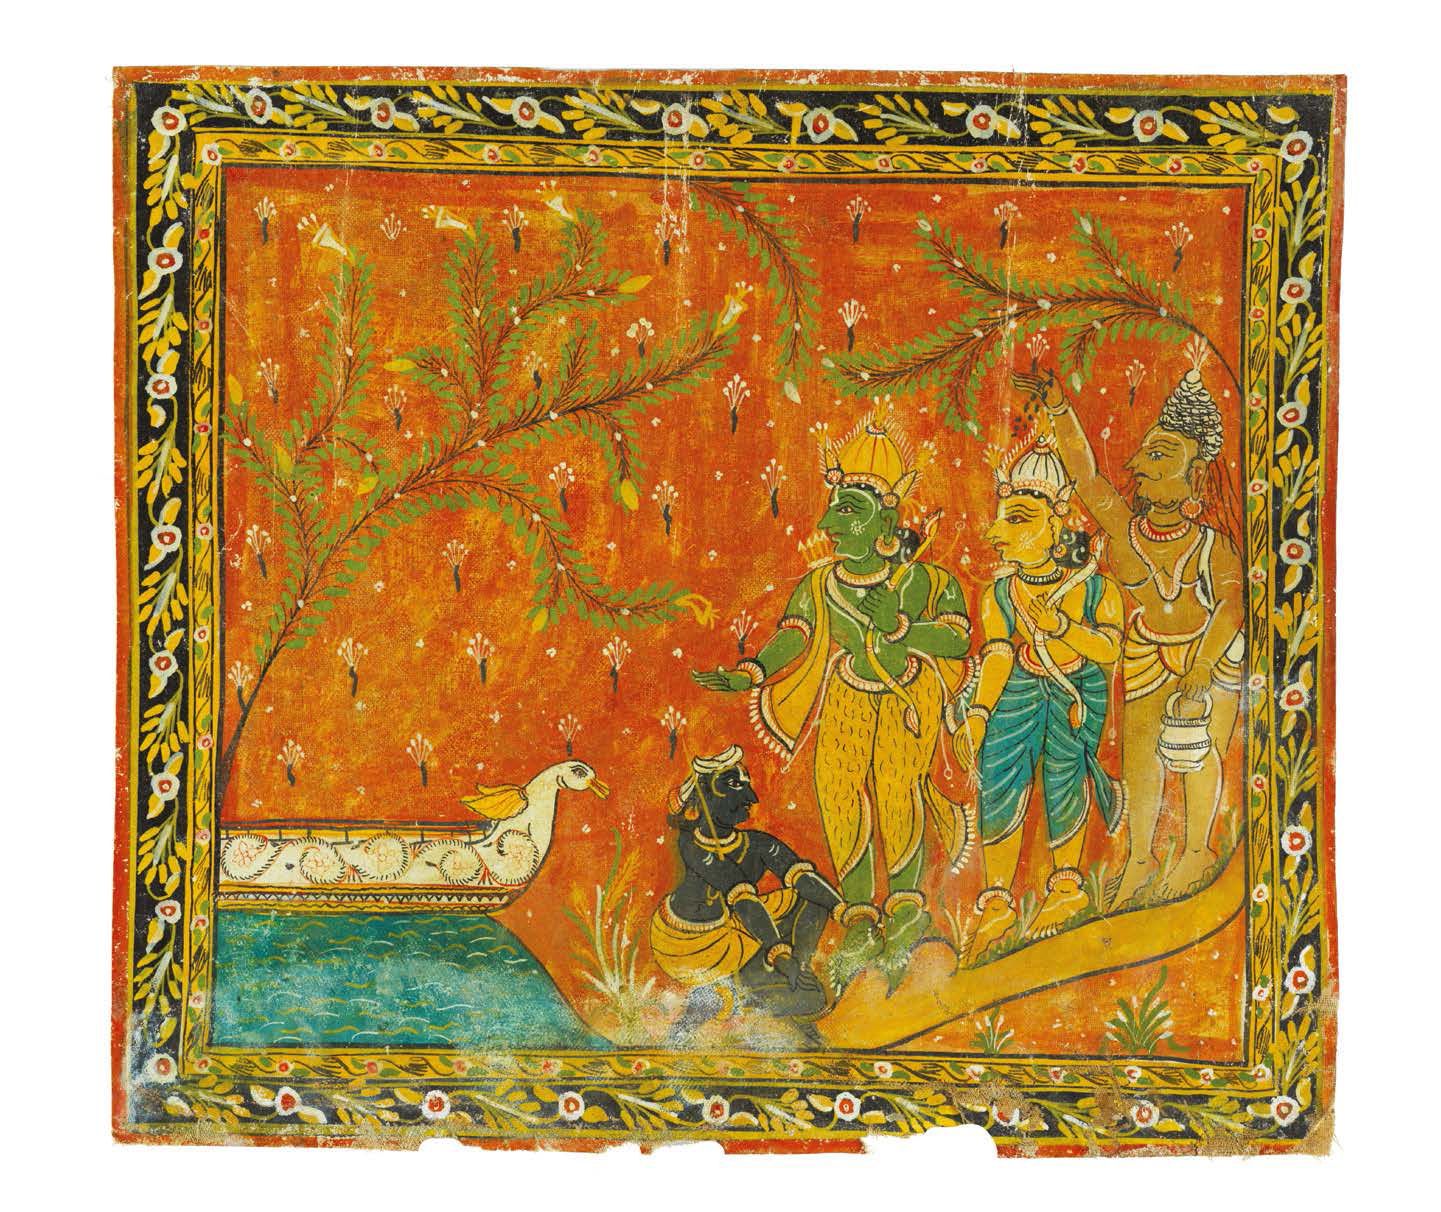 Null 罗摩衍那》的情节。织物上的多色颜料。罗摩、西塔和拉克什曼纳是《罗摩衍那》中的英雄，他们与一位里士一起被描绘在河边，可能是他们在森林中流亡期间。
南印度&hellip;